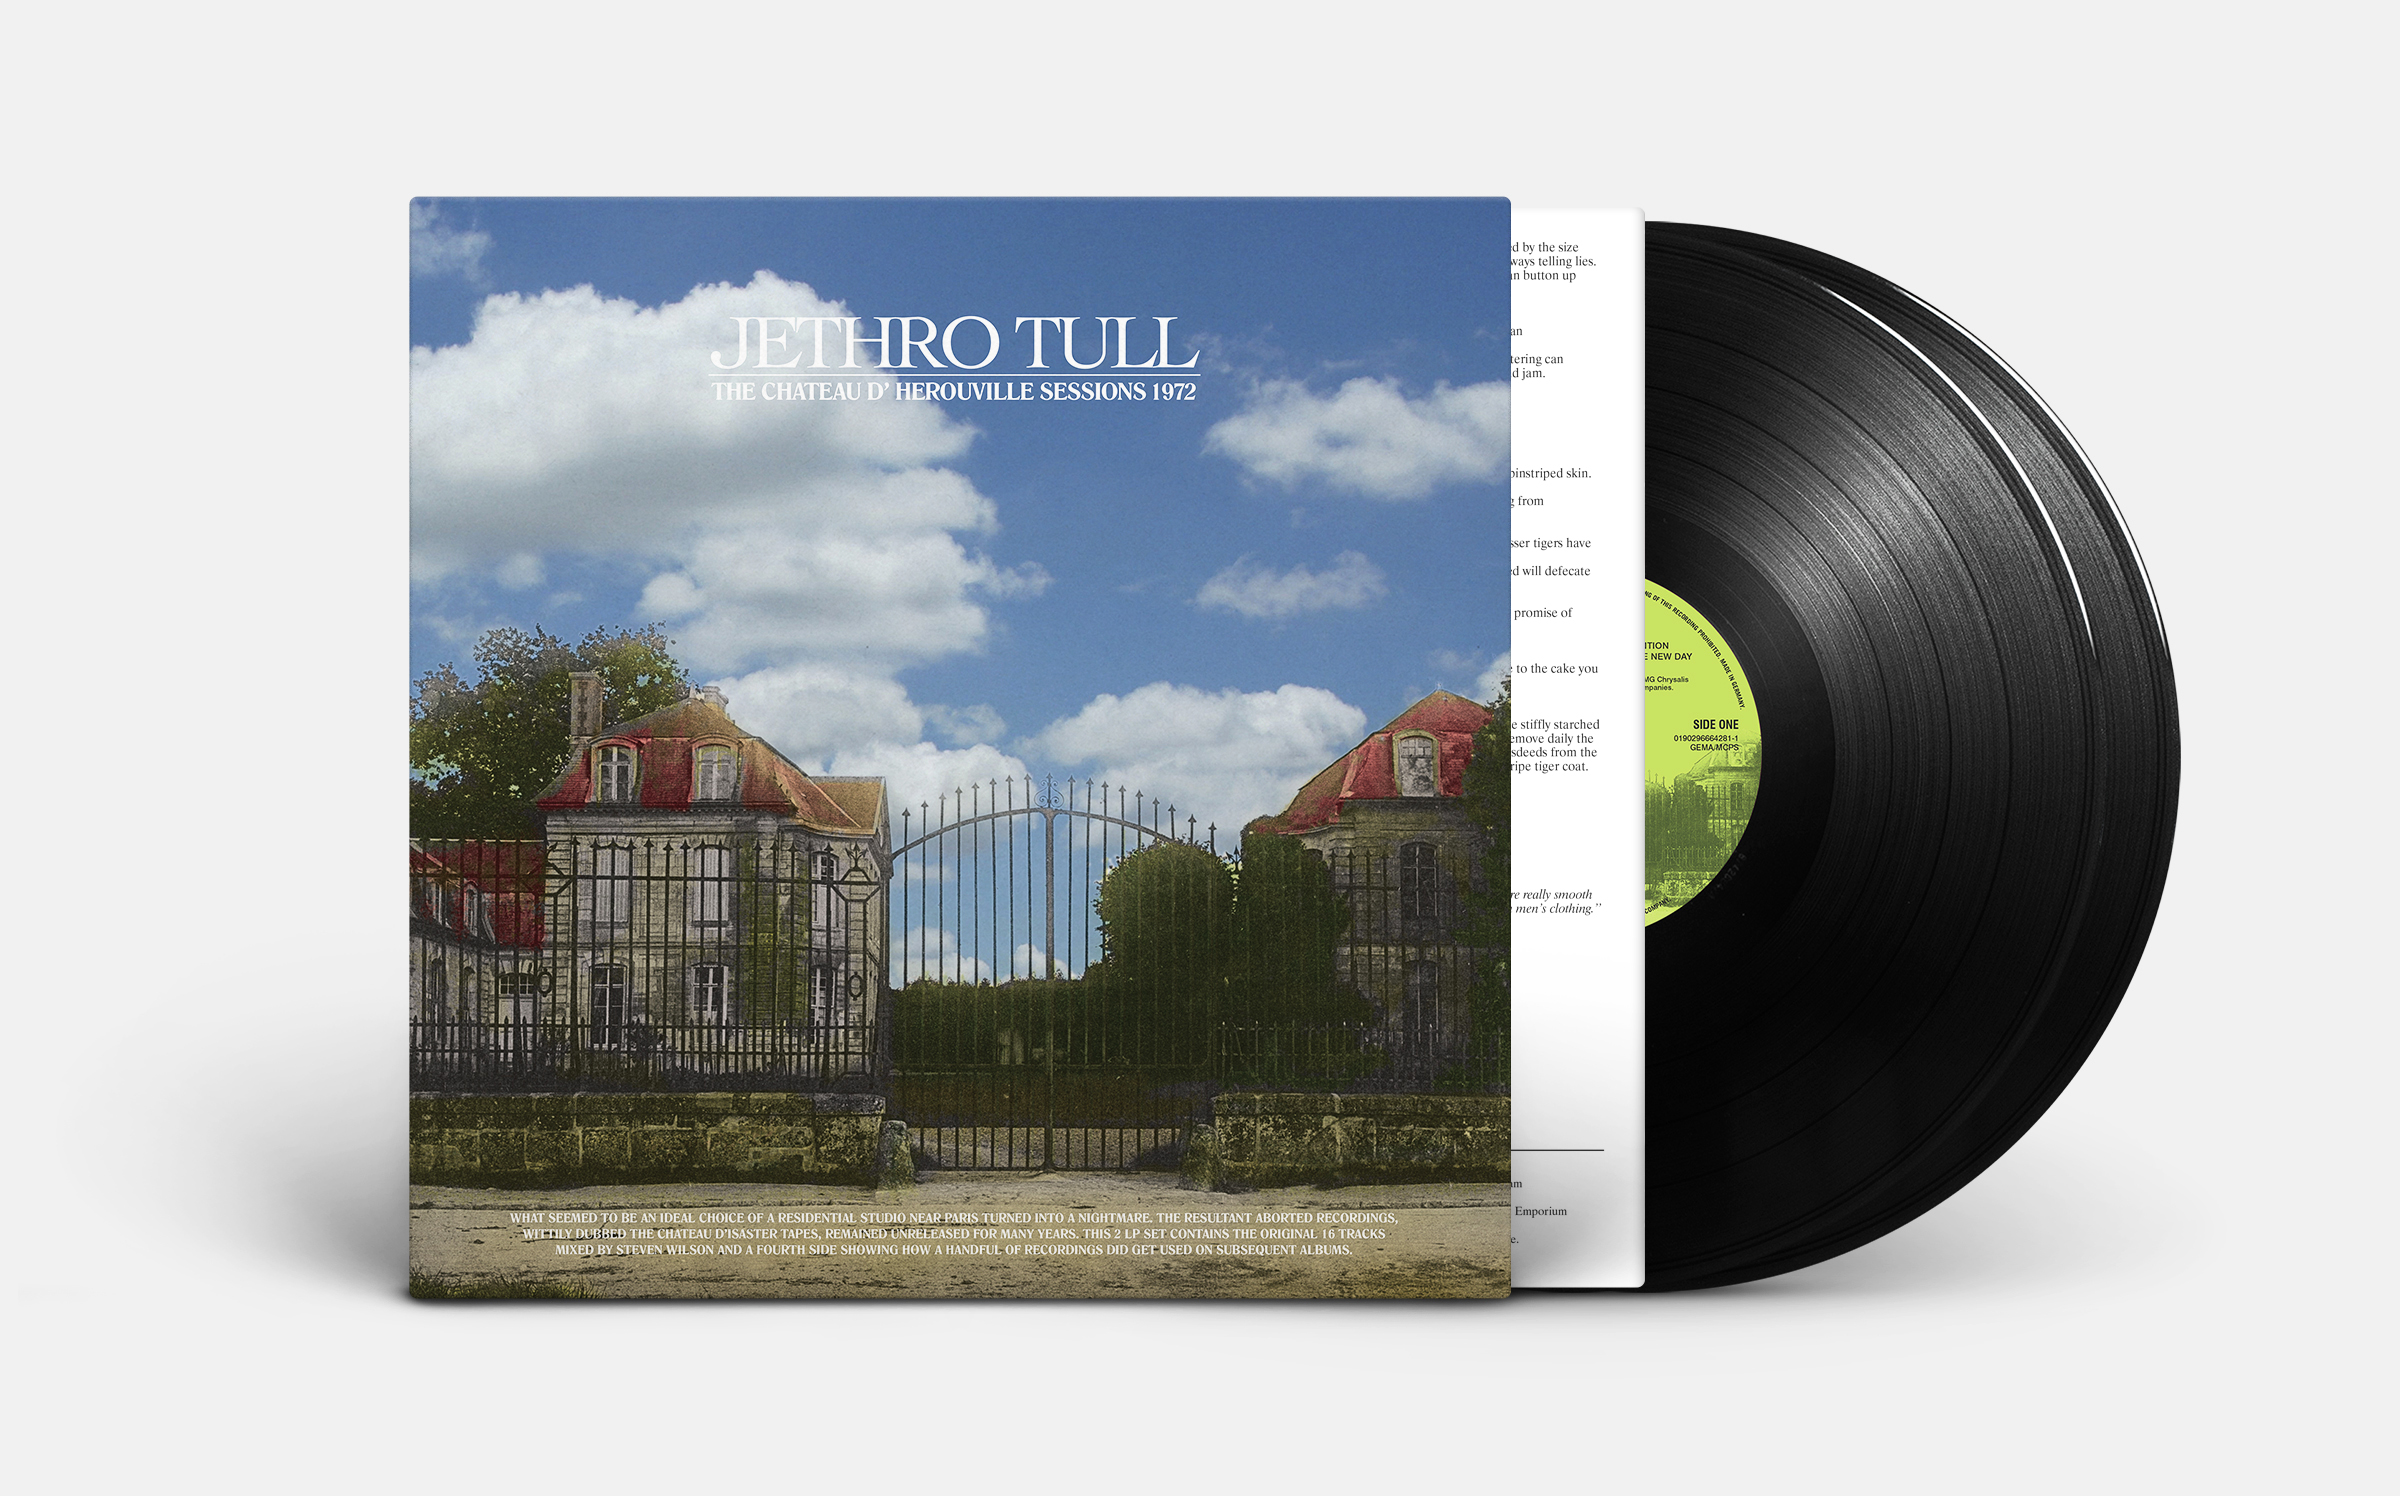 Jethro Tull – Σε βινύλιο για πρώτη φορά το άλμπουμ “The Château D’herouville Sessions”